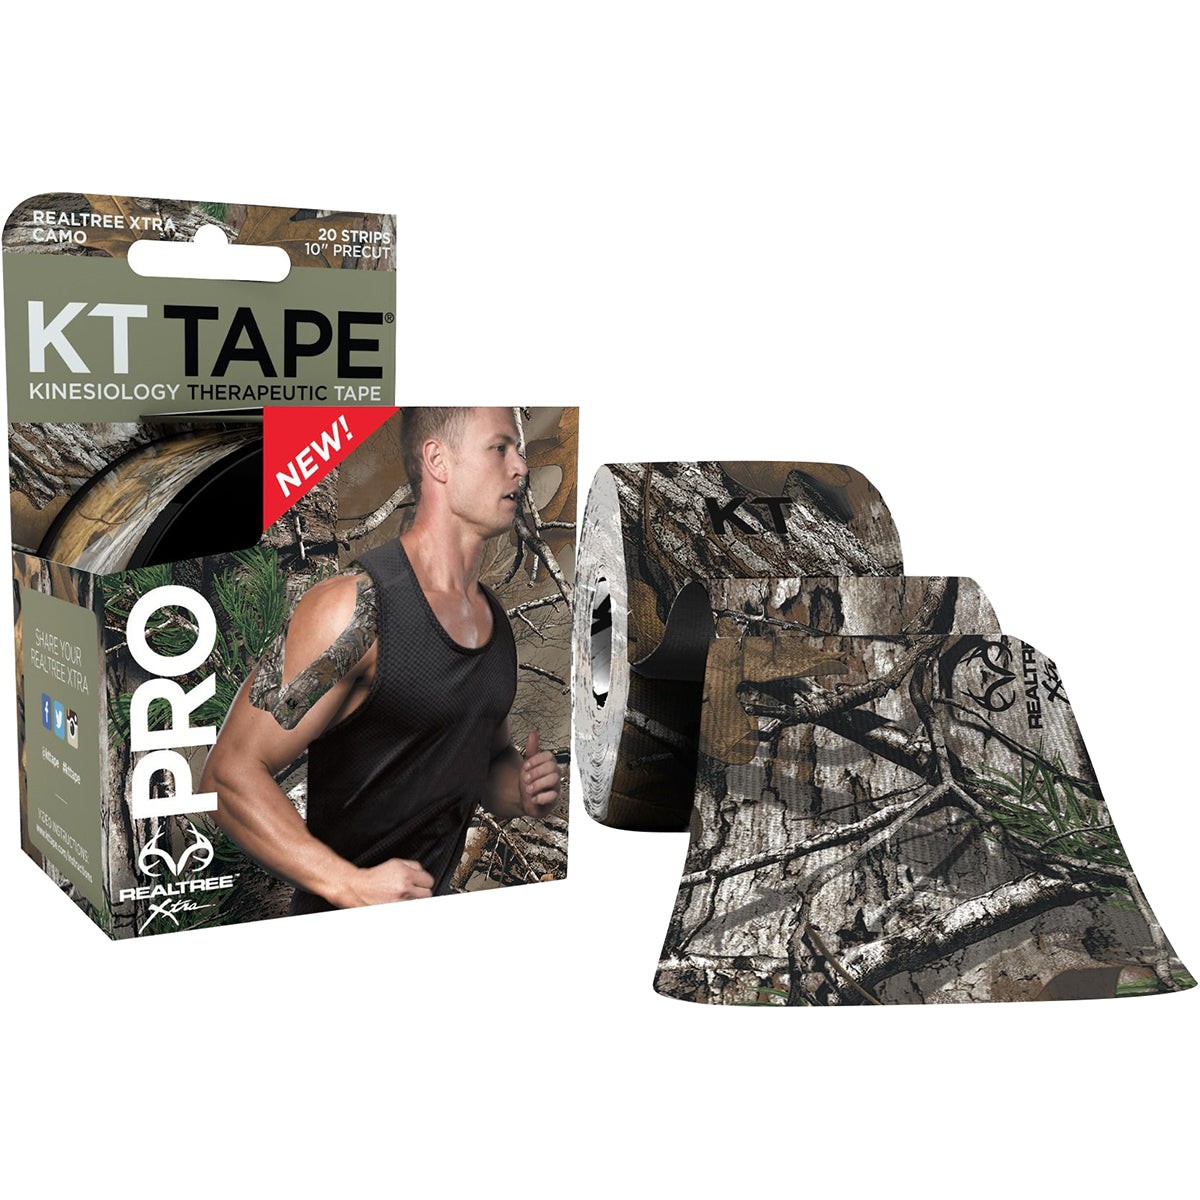 KT Tape Pro 10" Precut Kinesiology Elastic Sports Roll - 20 Strips, Digital Camo KT Tape